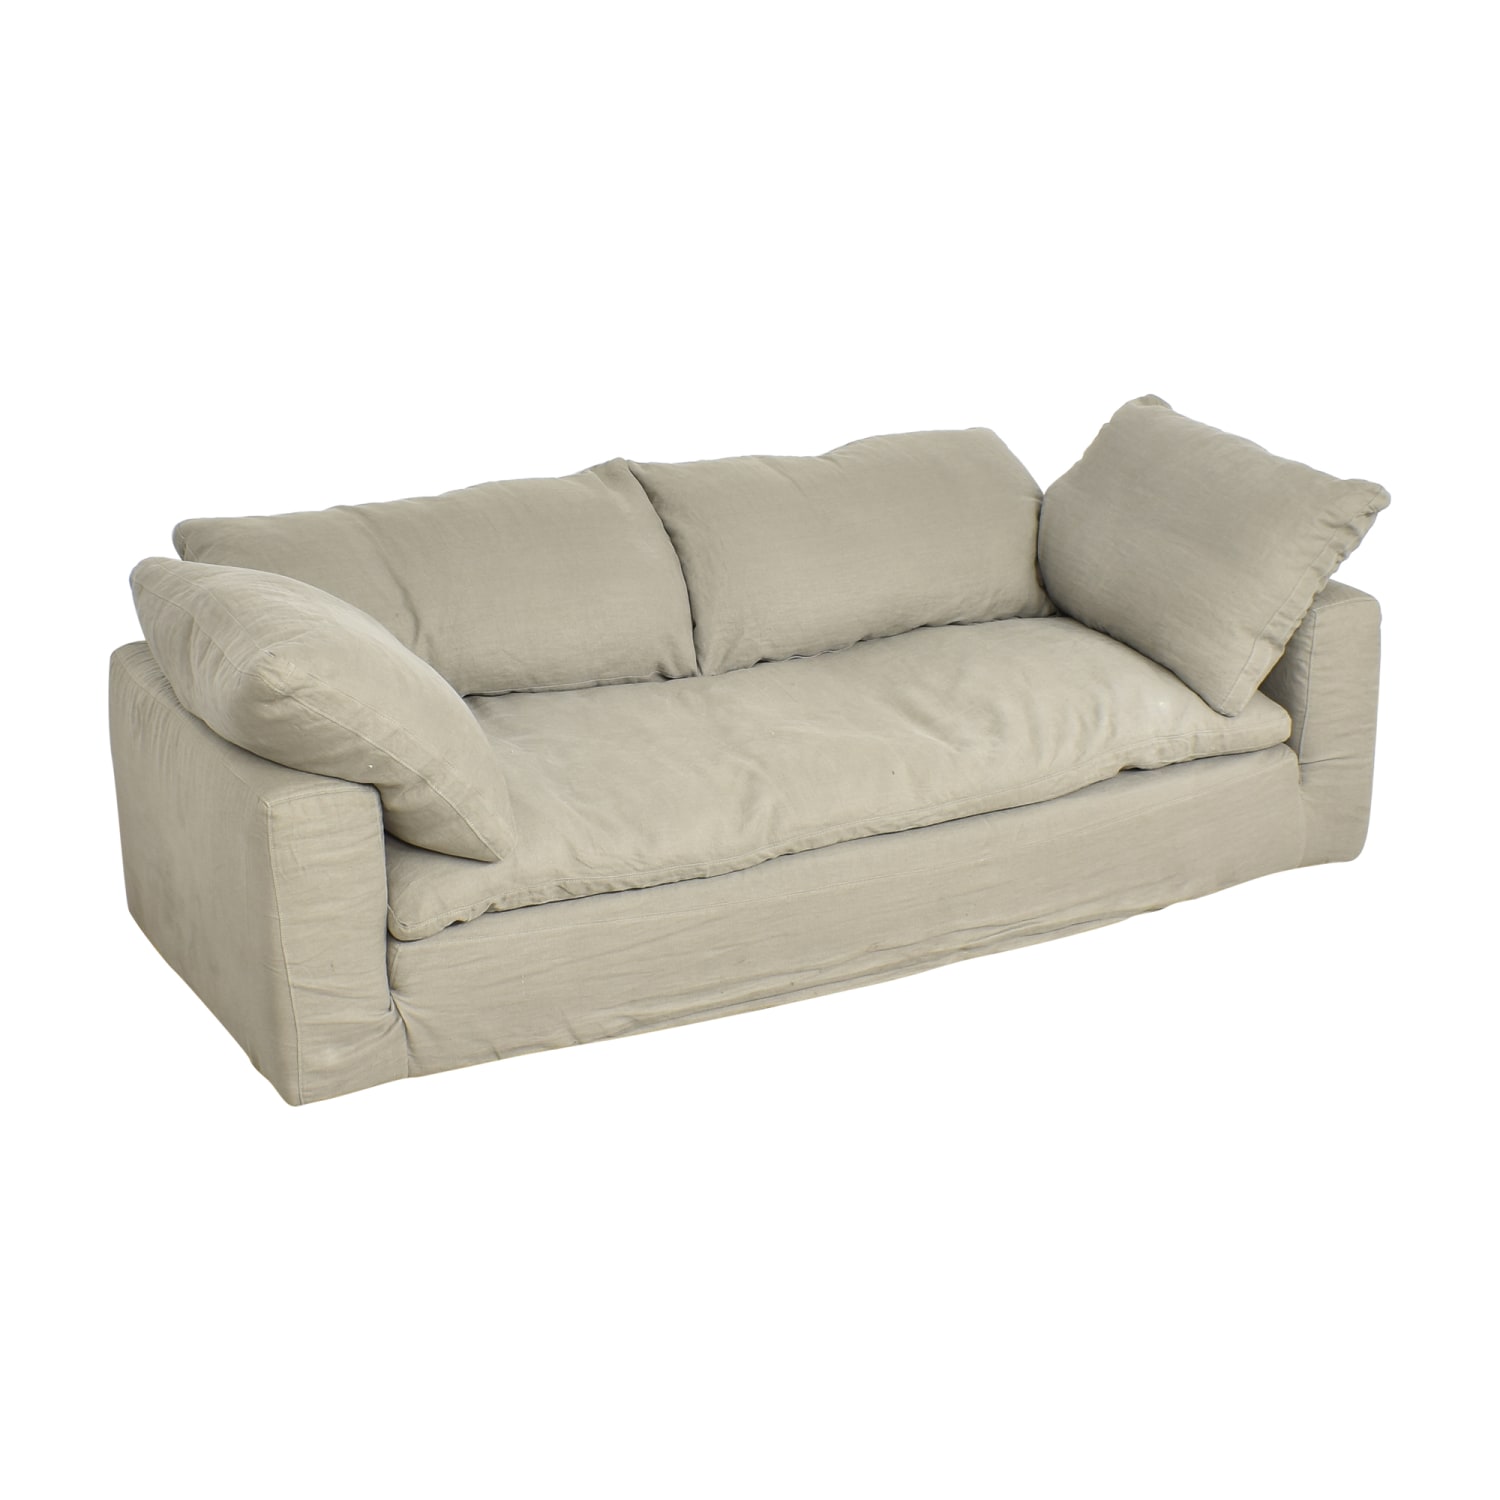 Cloud Bench-Seat Sofa